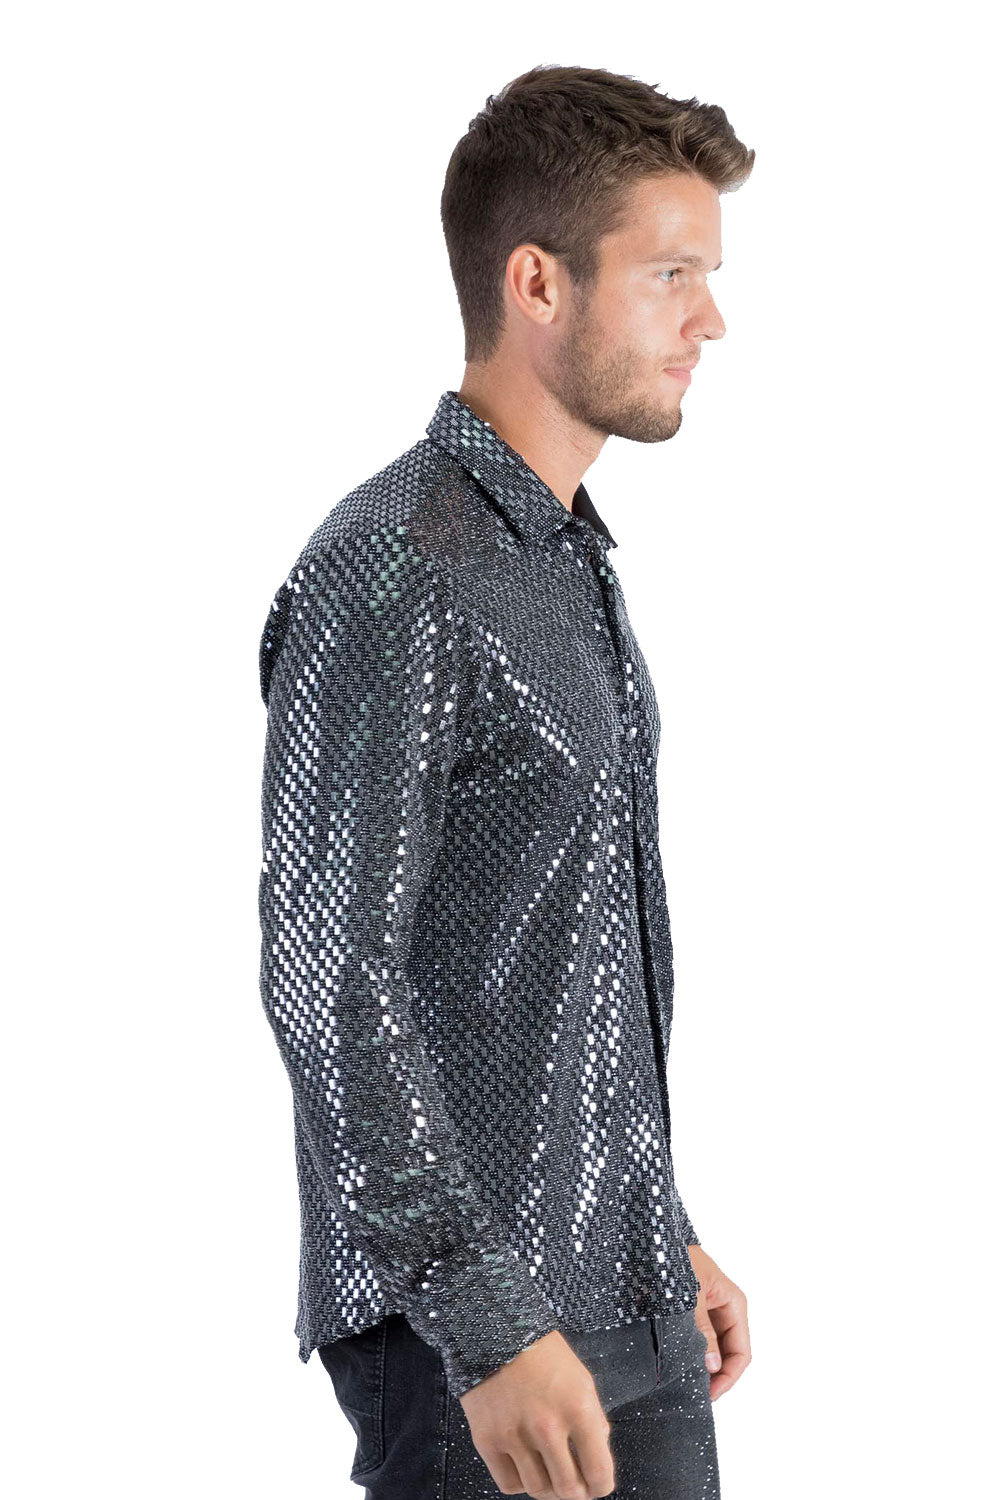 BARABAS Men's Shiny Sparkly Geometric Design Button Down Shirt B300